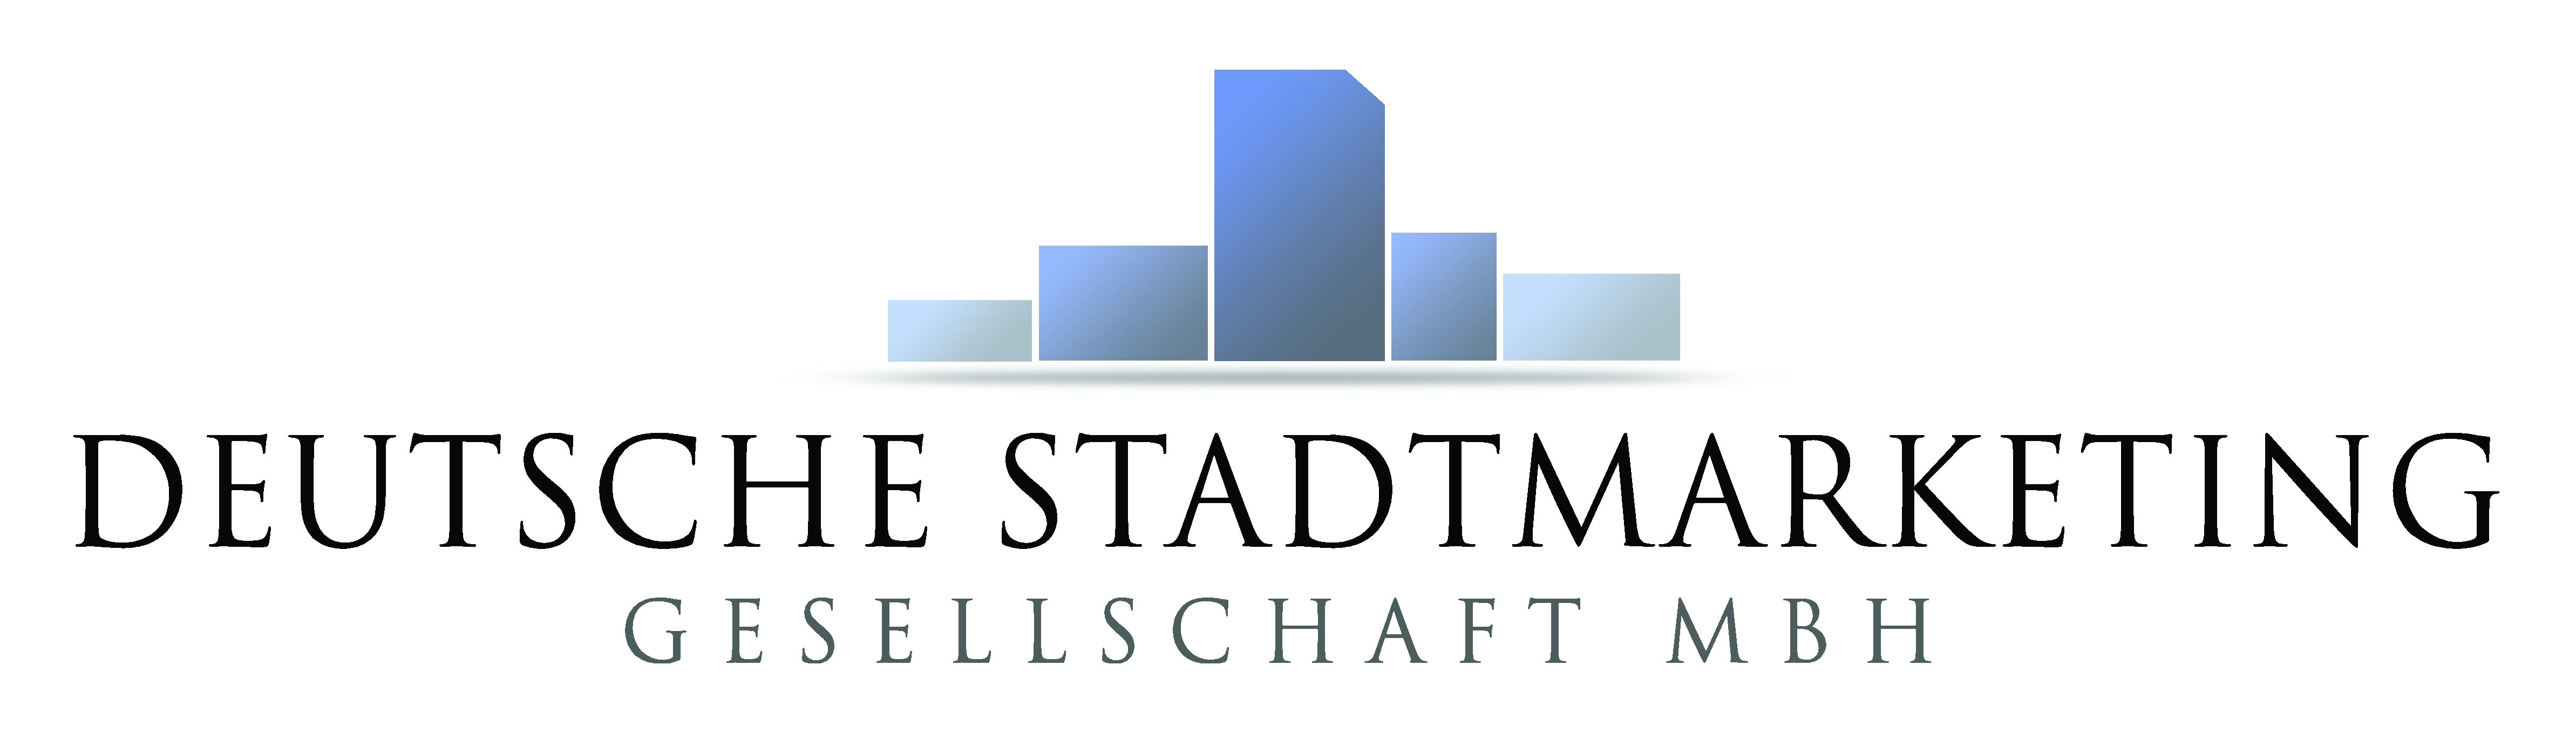 Deutsche Stadtmarketing Gesellschaft: go-digital